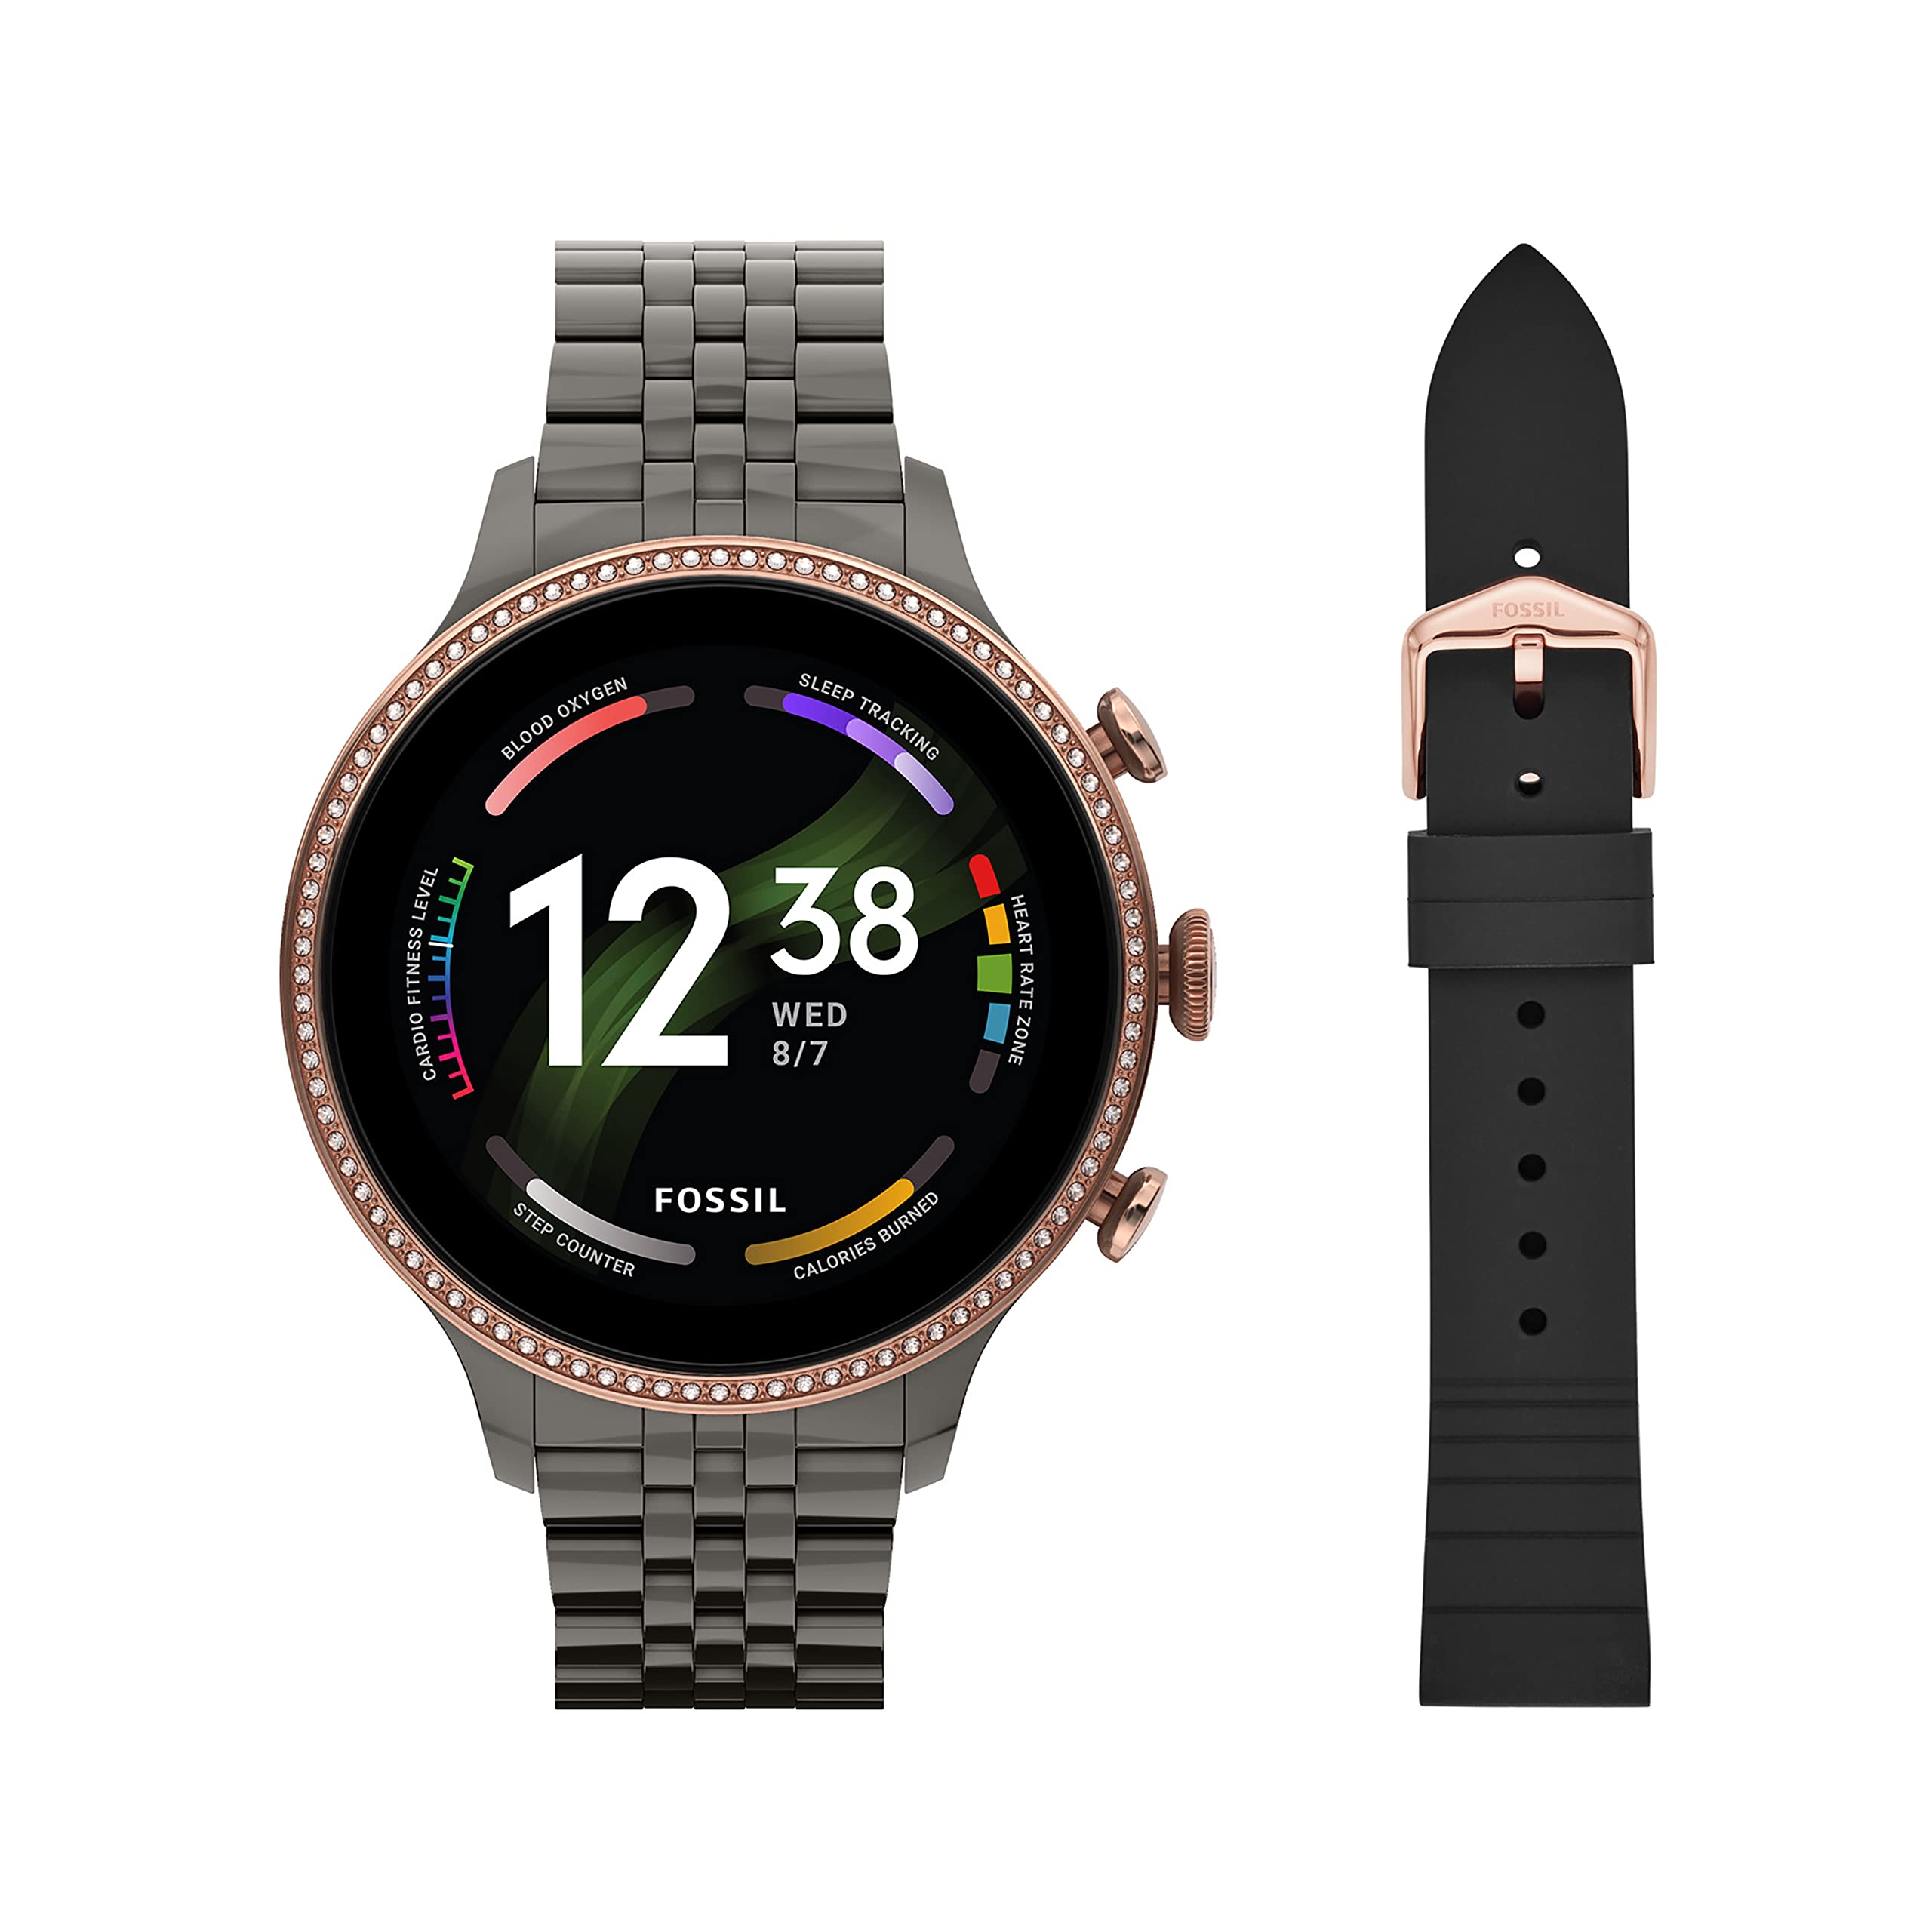 Fossil Gen 6 42mm Touchscreen Smartwatch with Alexa Built-In, Heart Rate, Blood Oxygen, Activity Tracking, GPS, Speaker, Smartphone Notifications